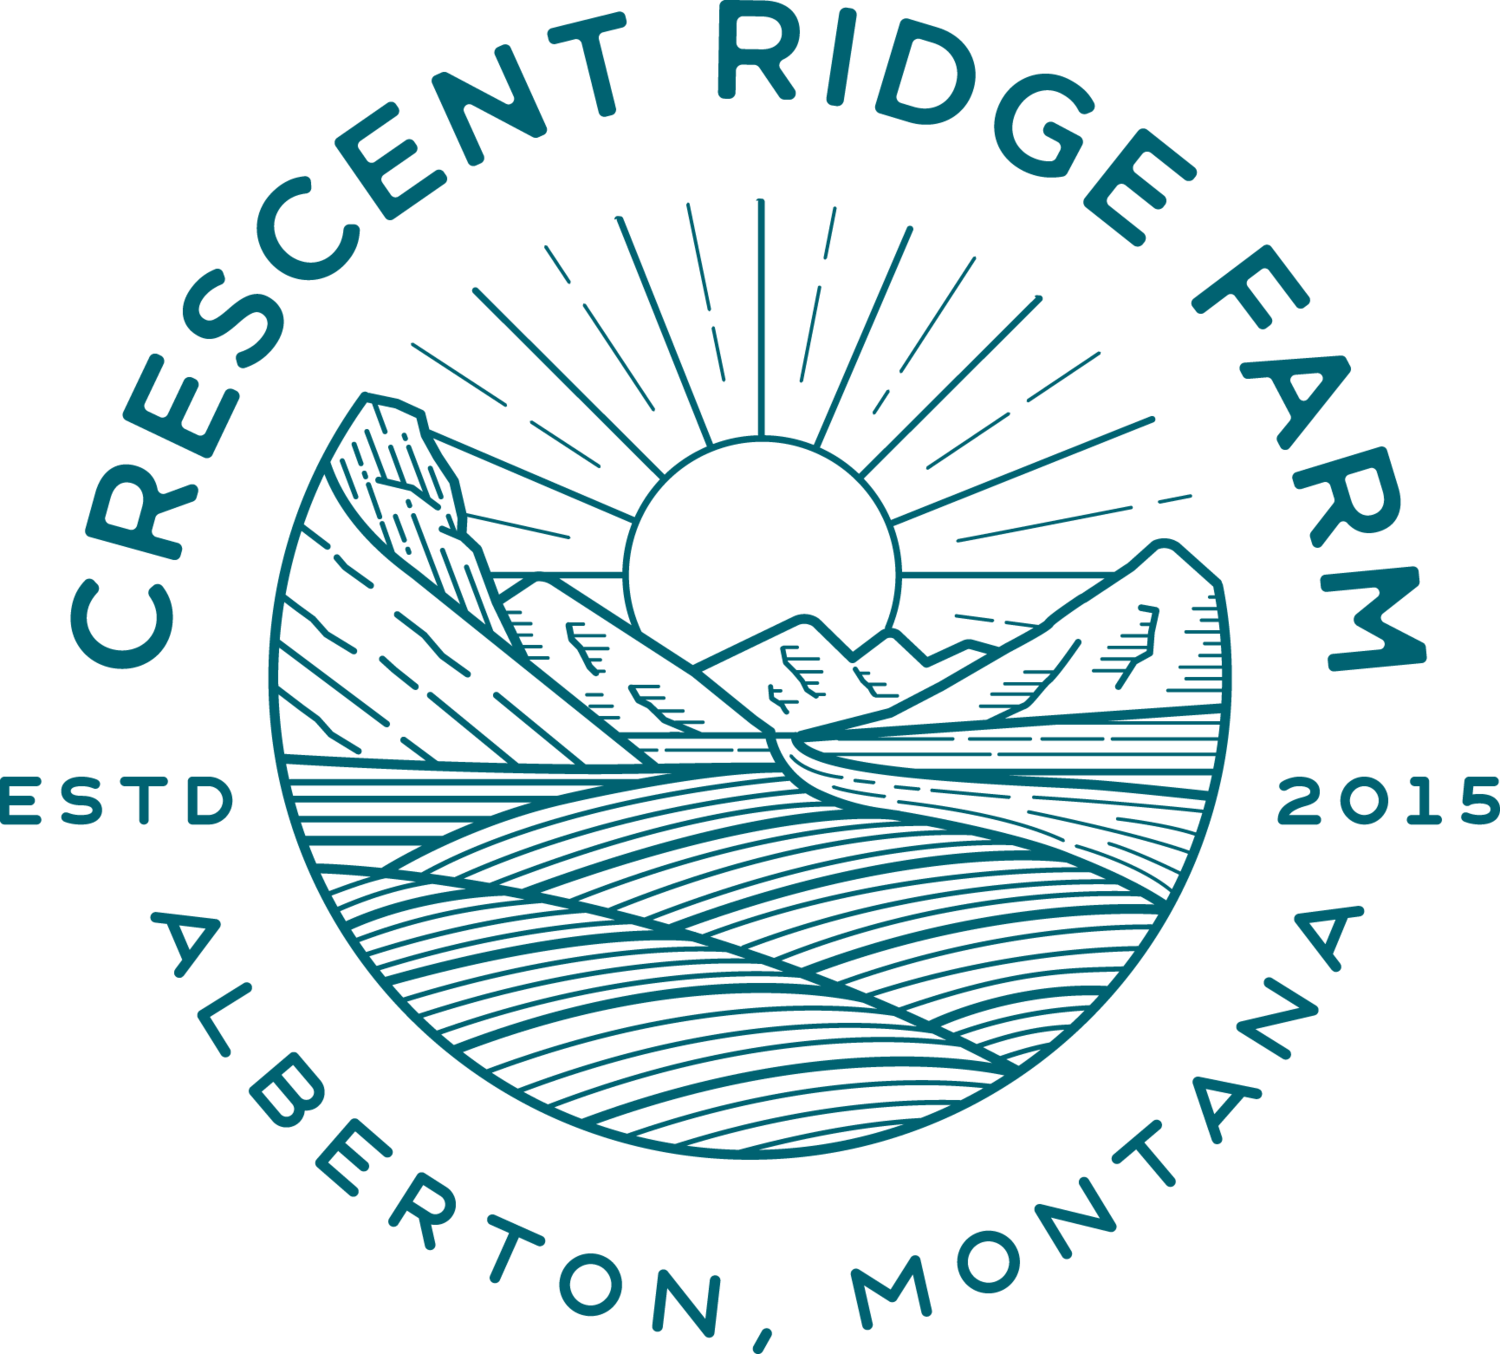 Crescent Ridge Farm